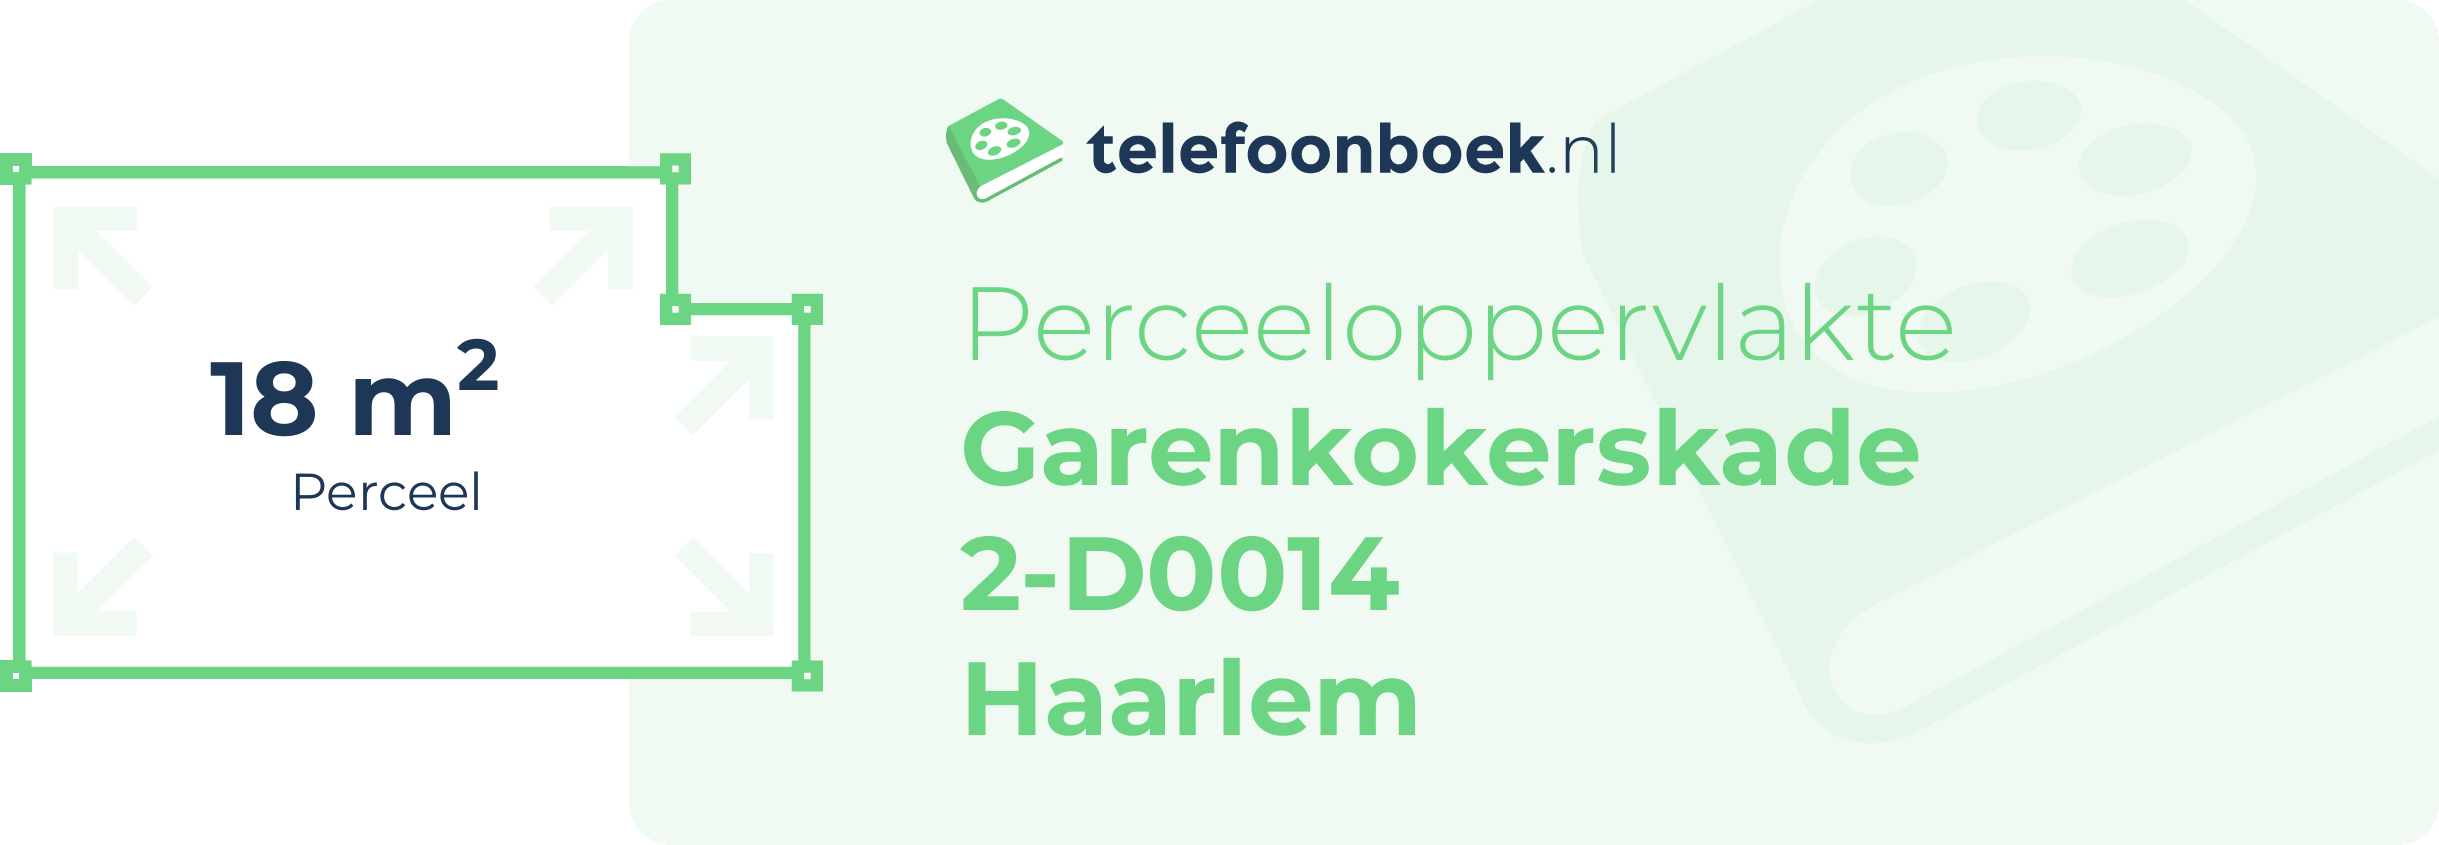 Perceeloppervlakte Garenkokerskade 2-D0014 Haarlem